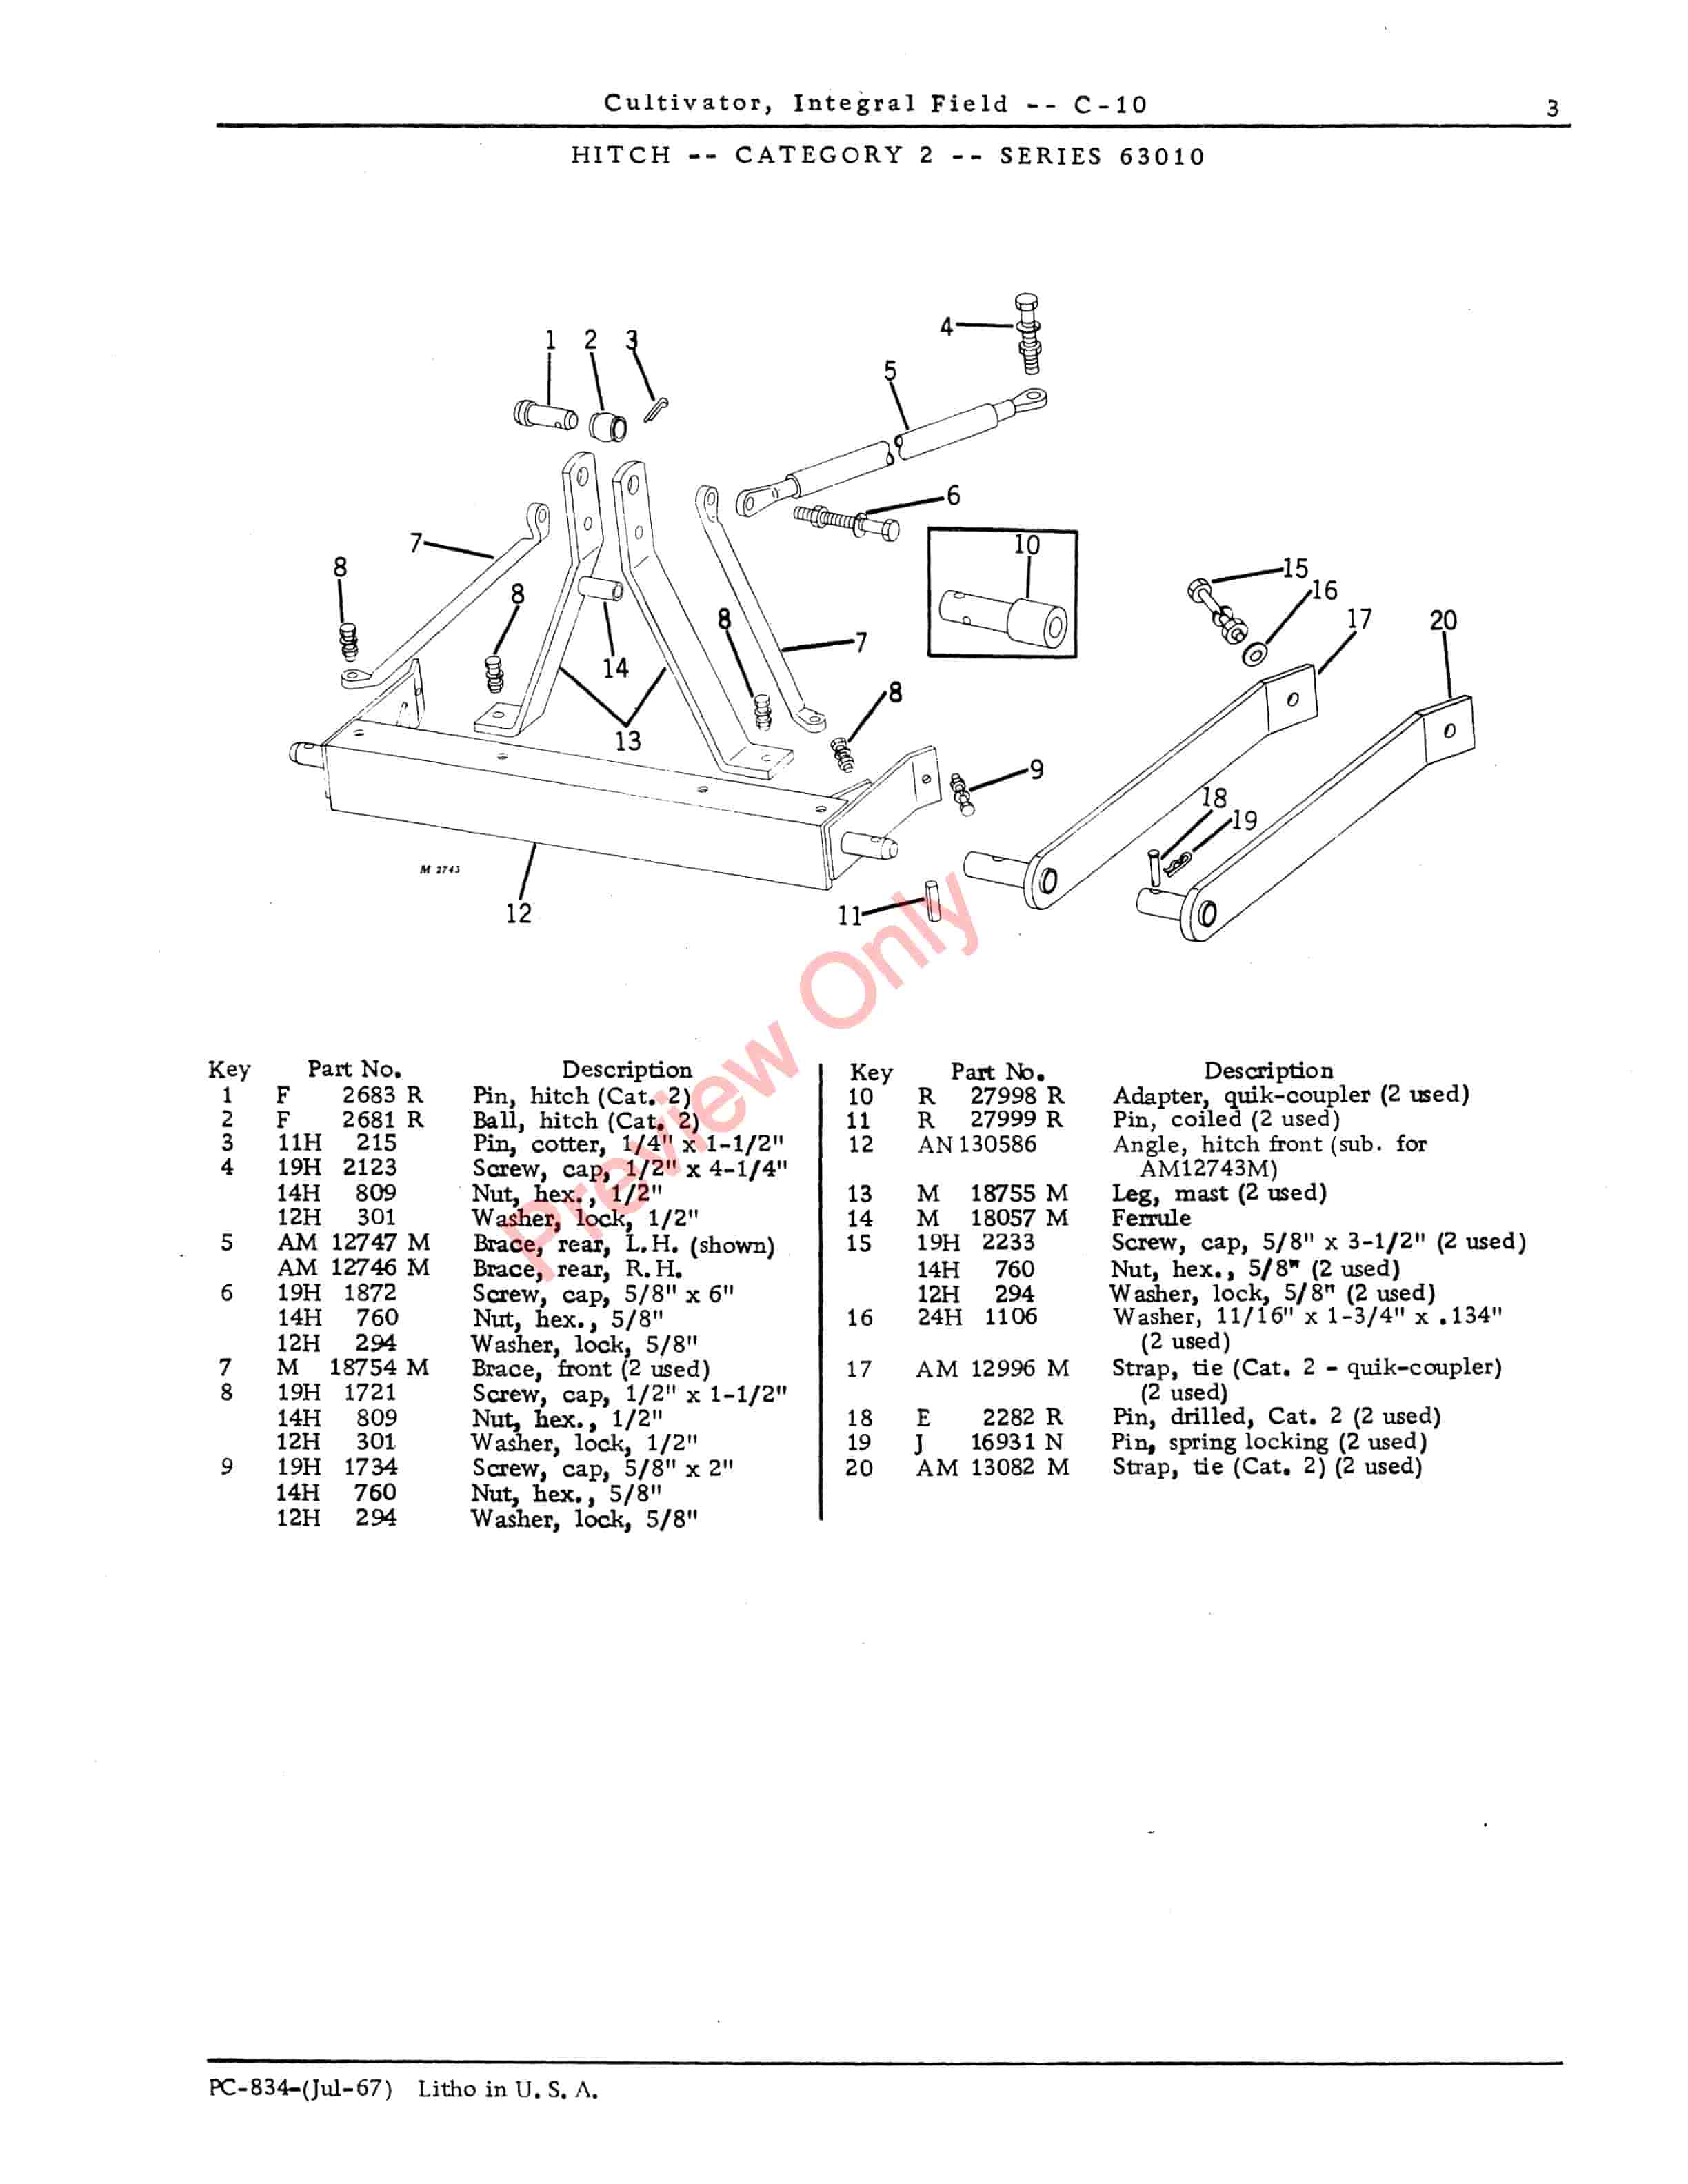 John Deere C-10 Integral Field Cultivator Parts Catalog PC834 01JUL67-5